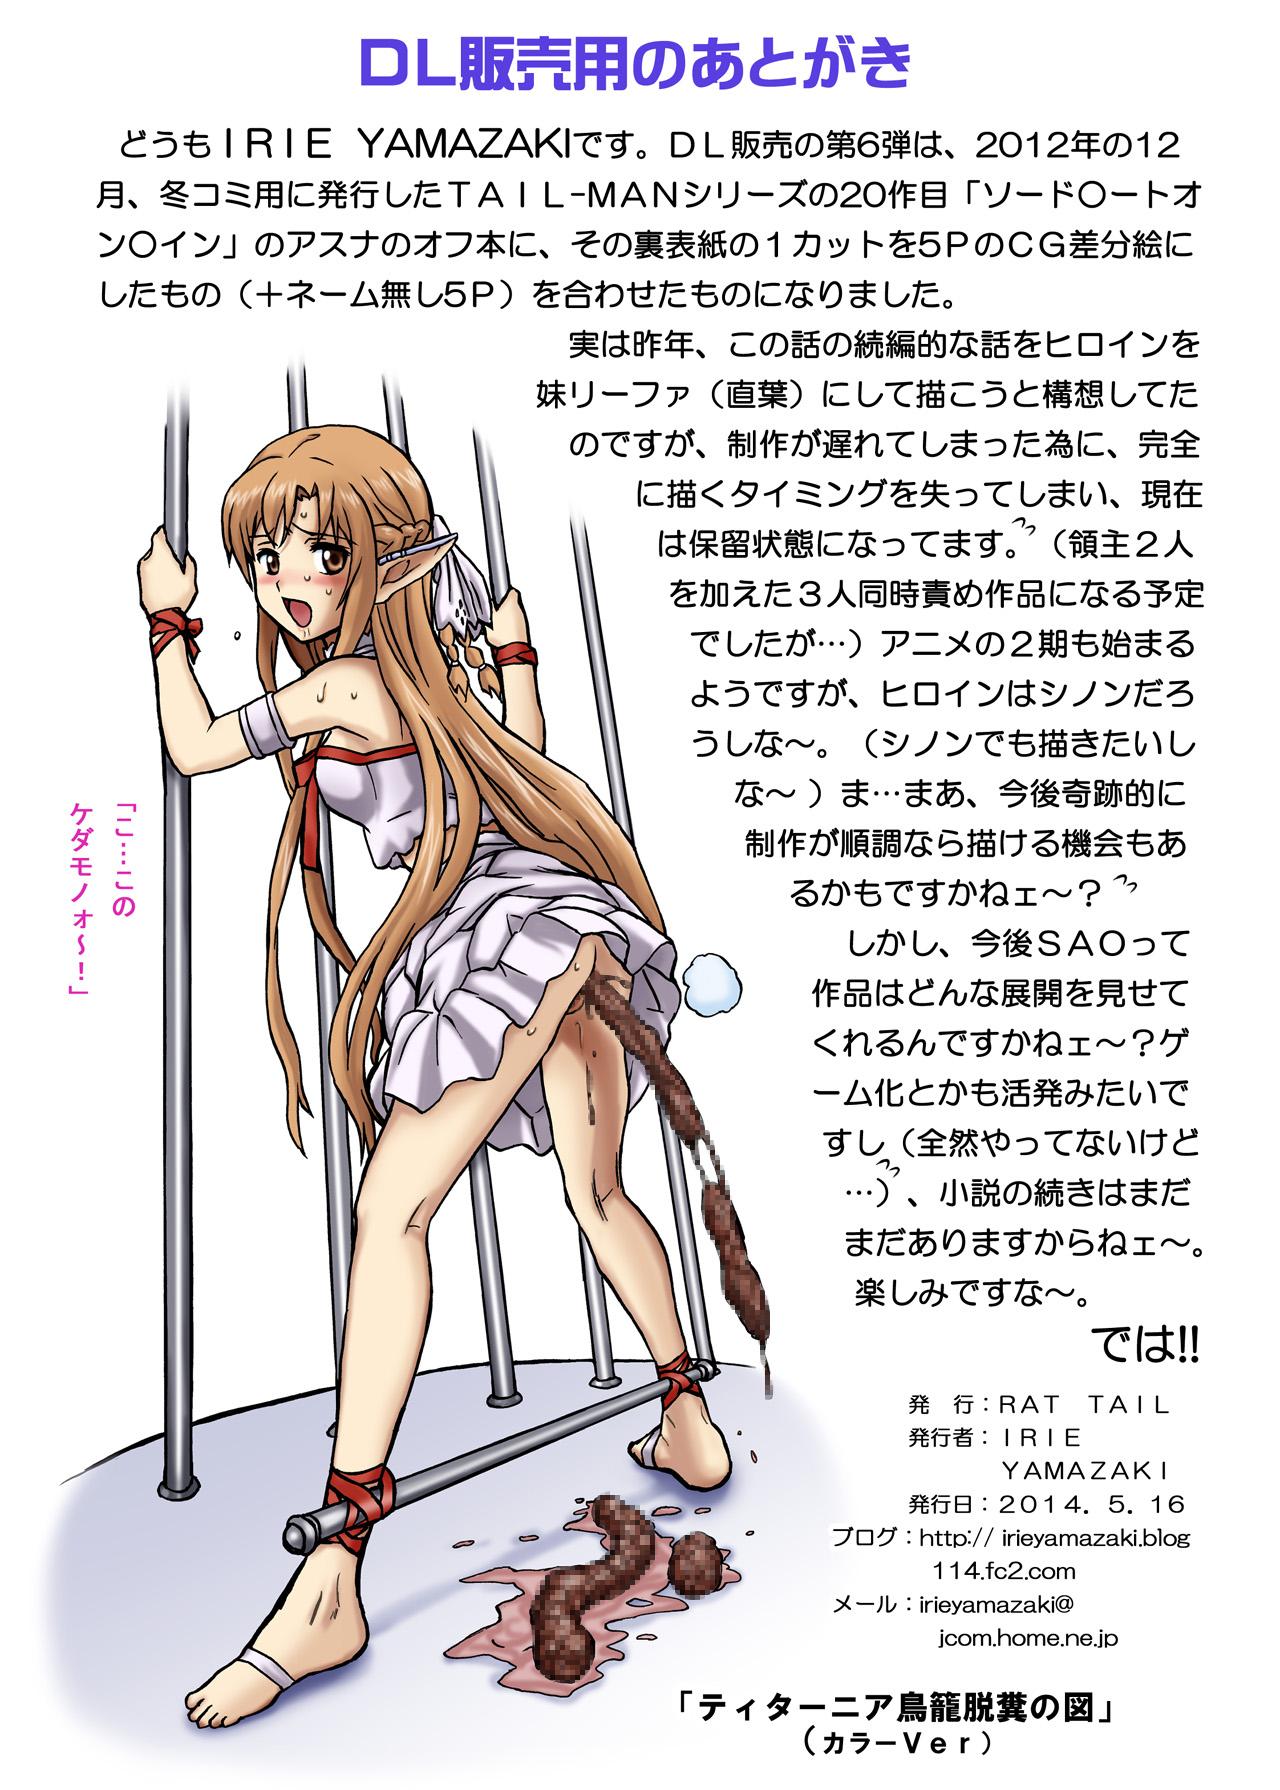 Bareback TAIL-MAN ASUNA BOOK - Sword art online Sexcam - Page 45